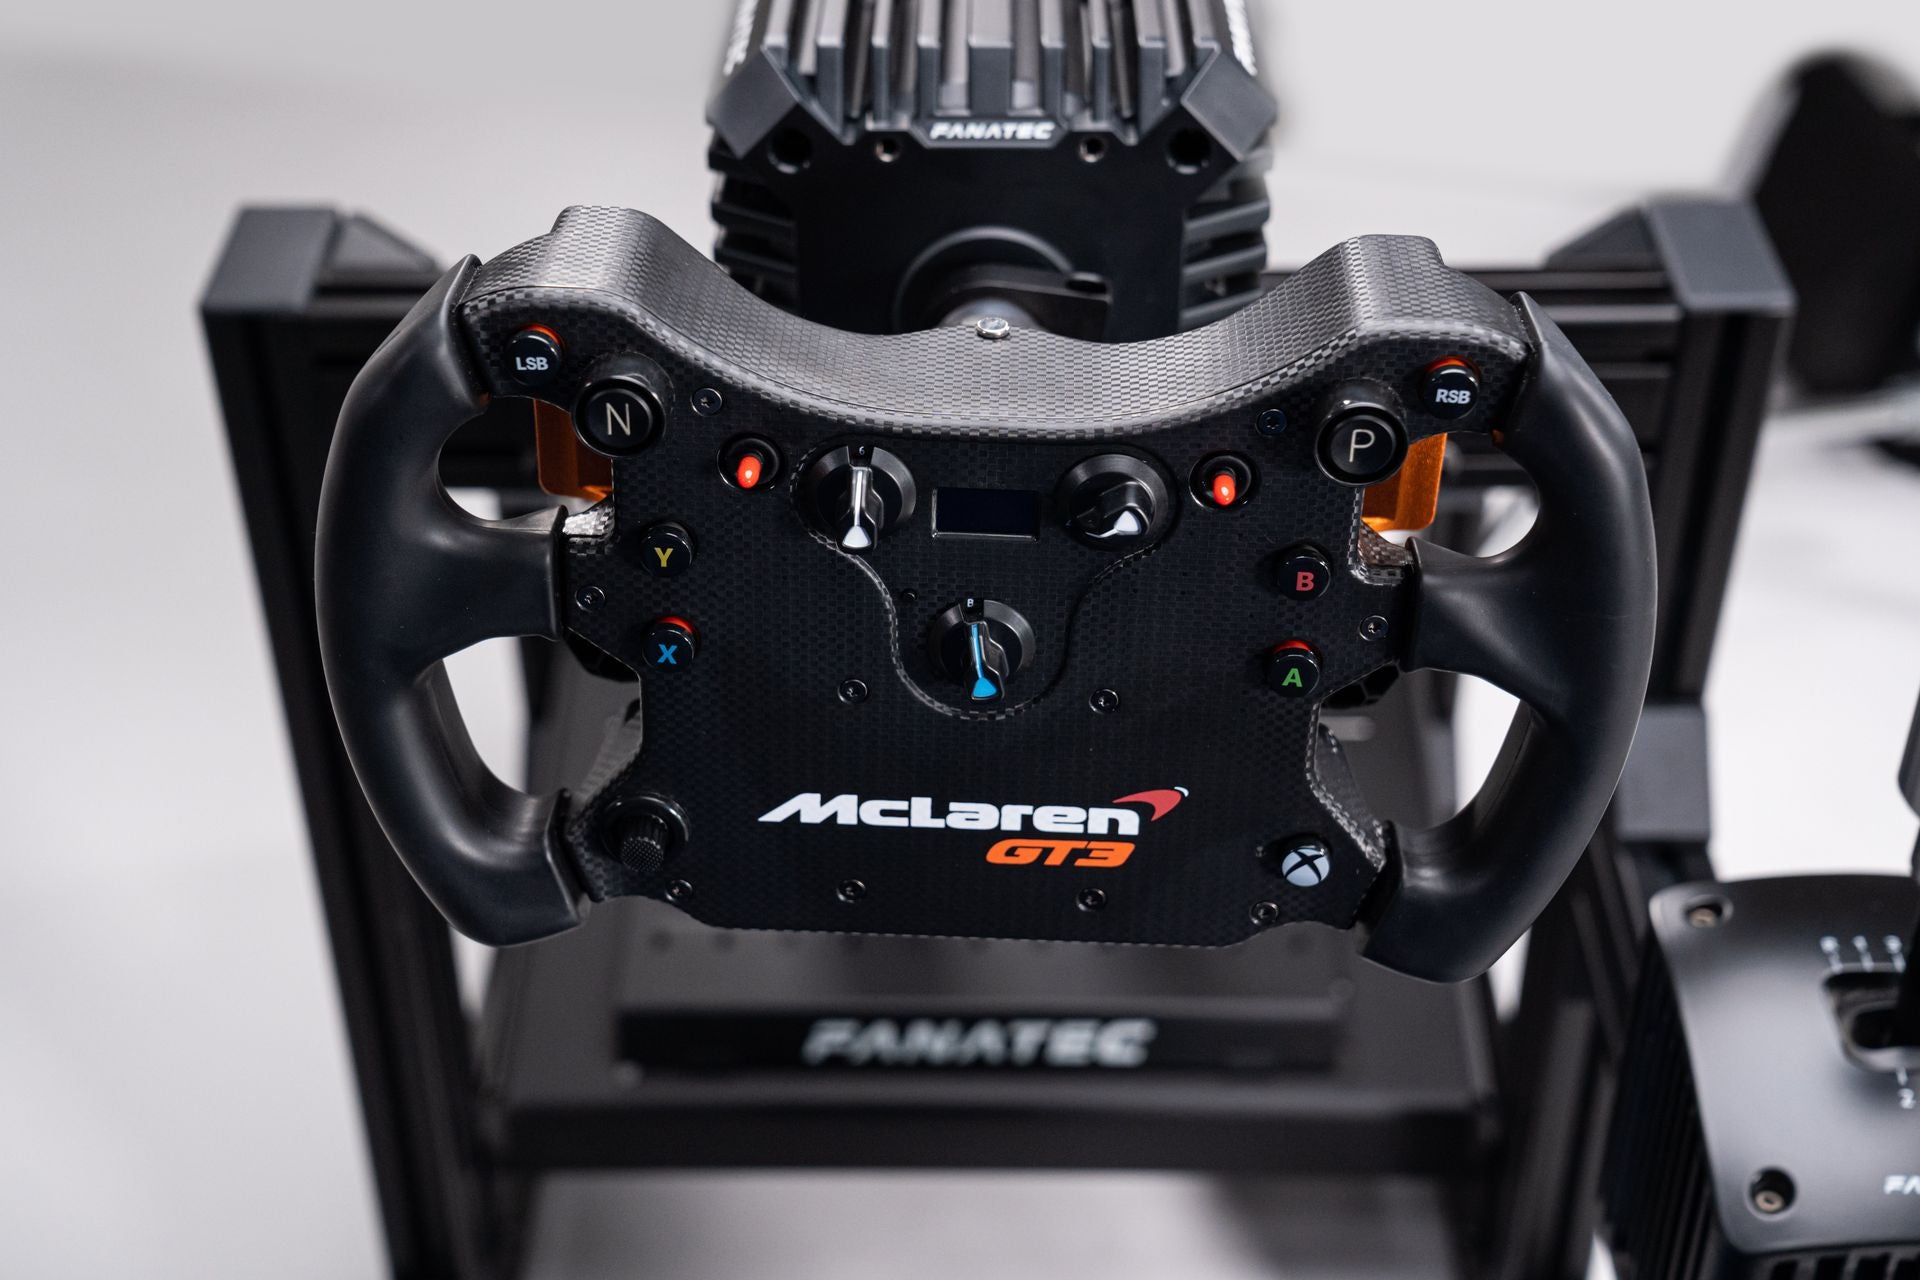 Fanatec Showcases Prototype Entry-Level Sim Racing Rig